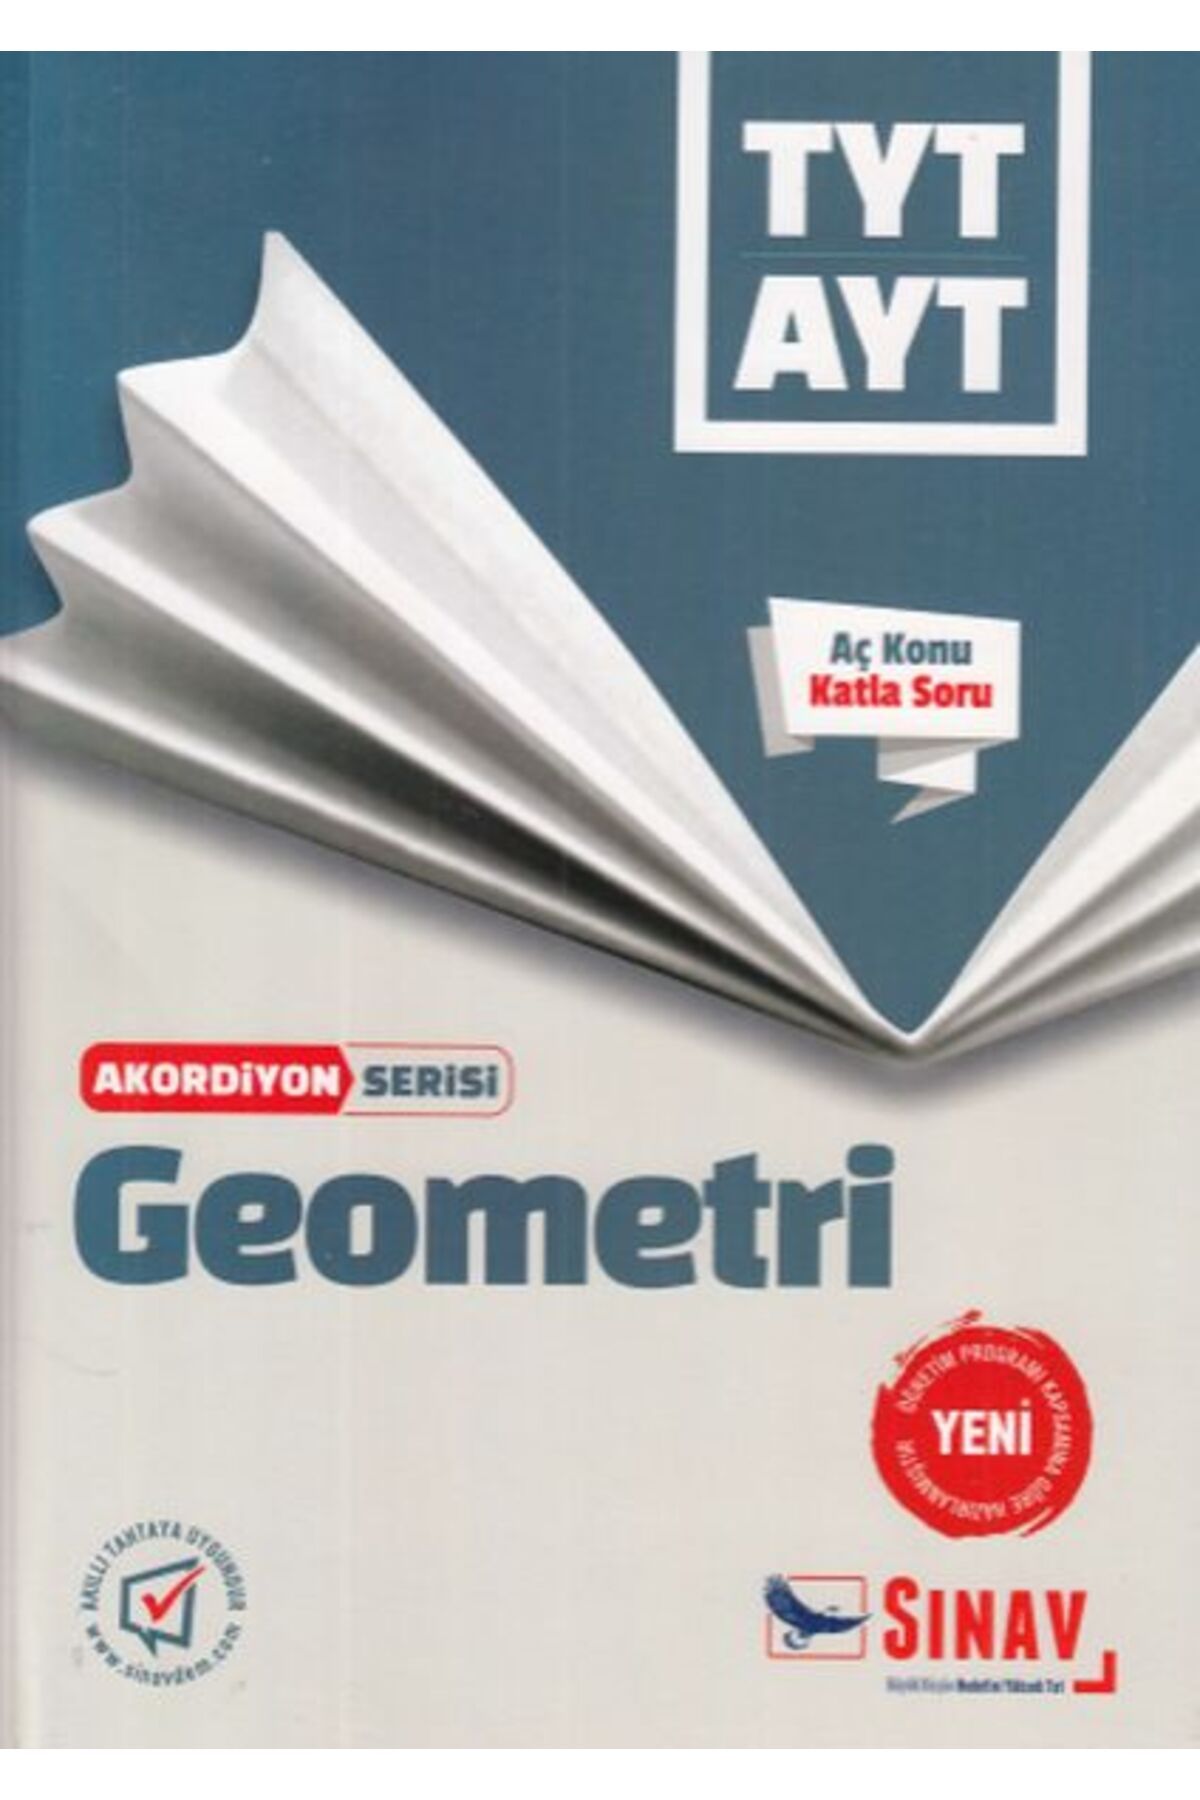 Sınav Yayınları Sınav TYT AYT Geometri Akordiyon Serisi (Yeni)